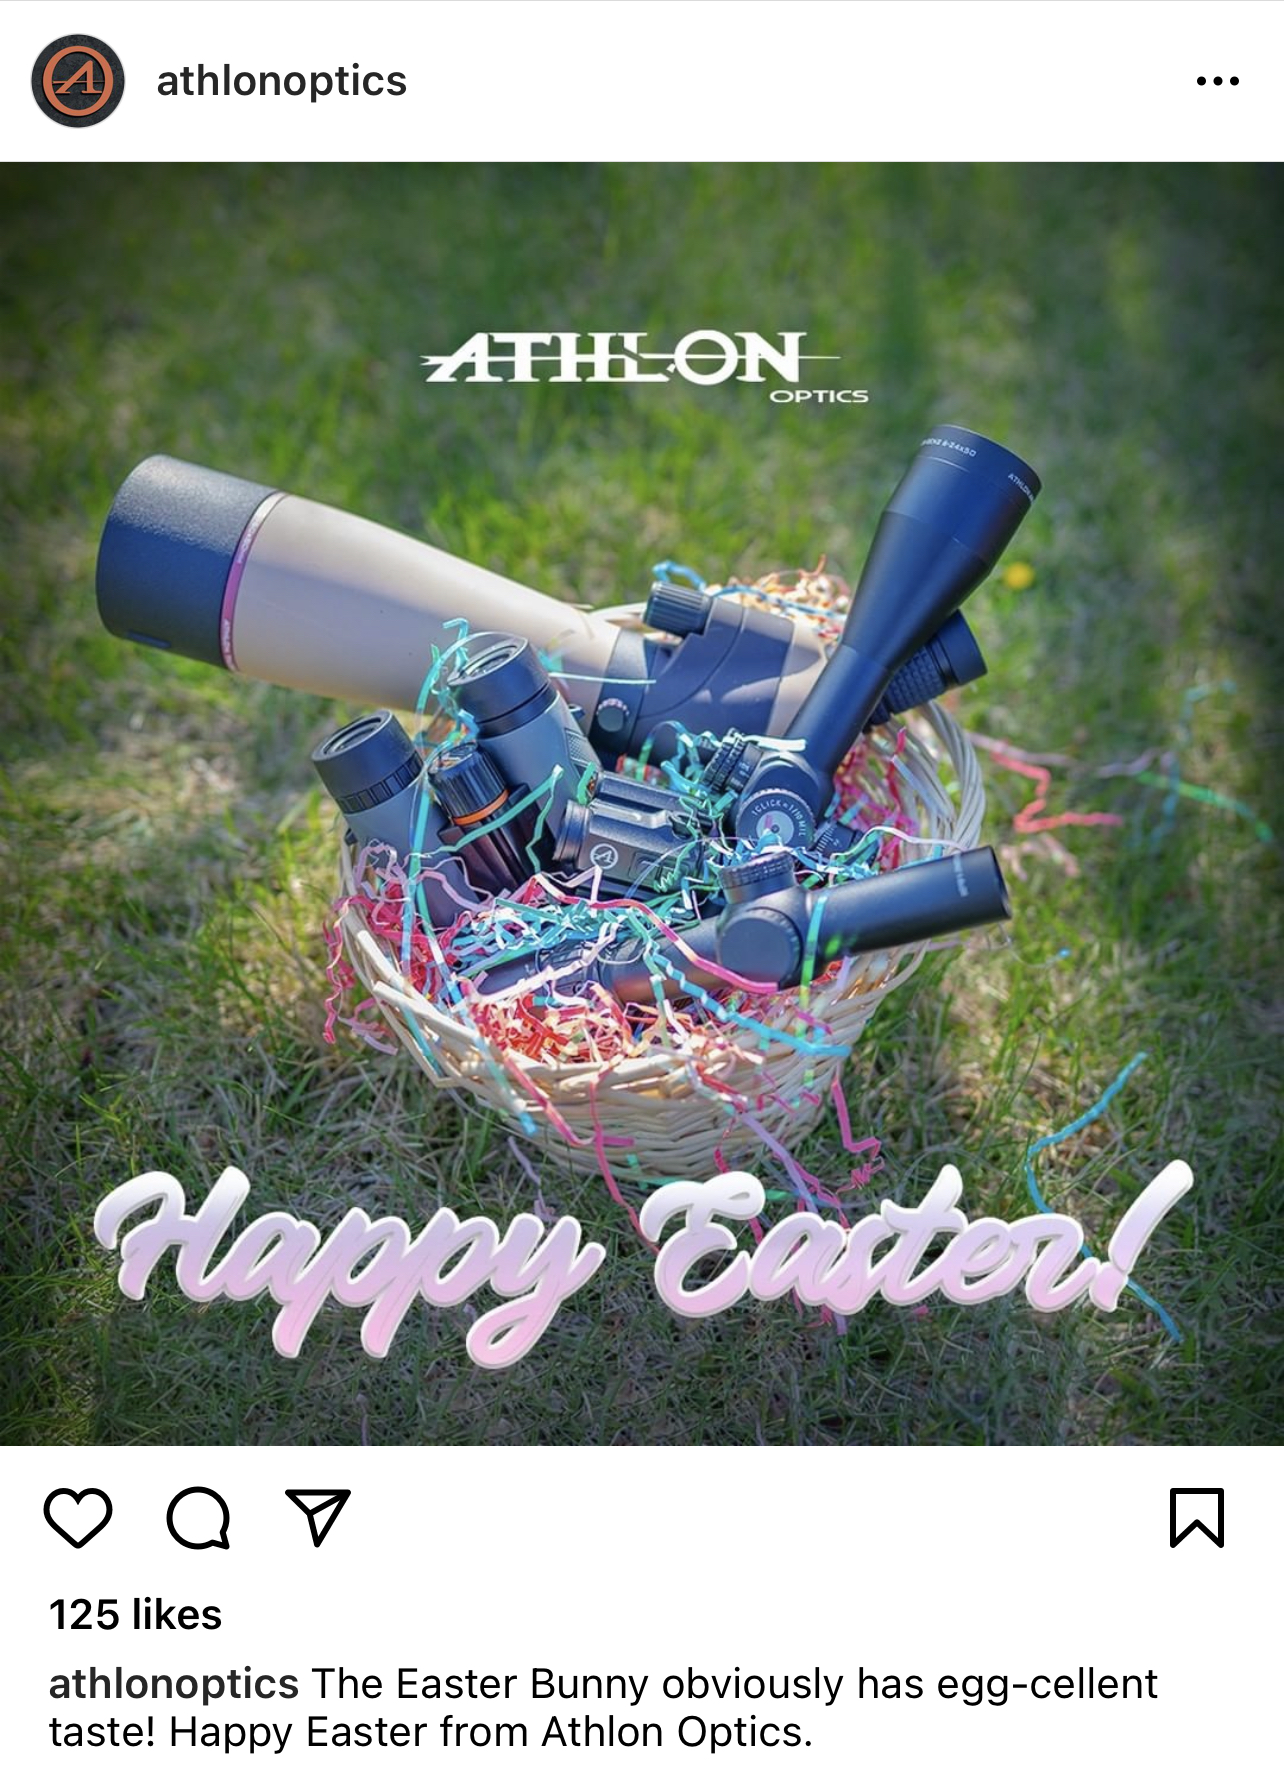 Marketing guns to kids - Easter baskets